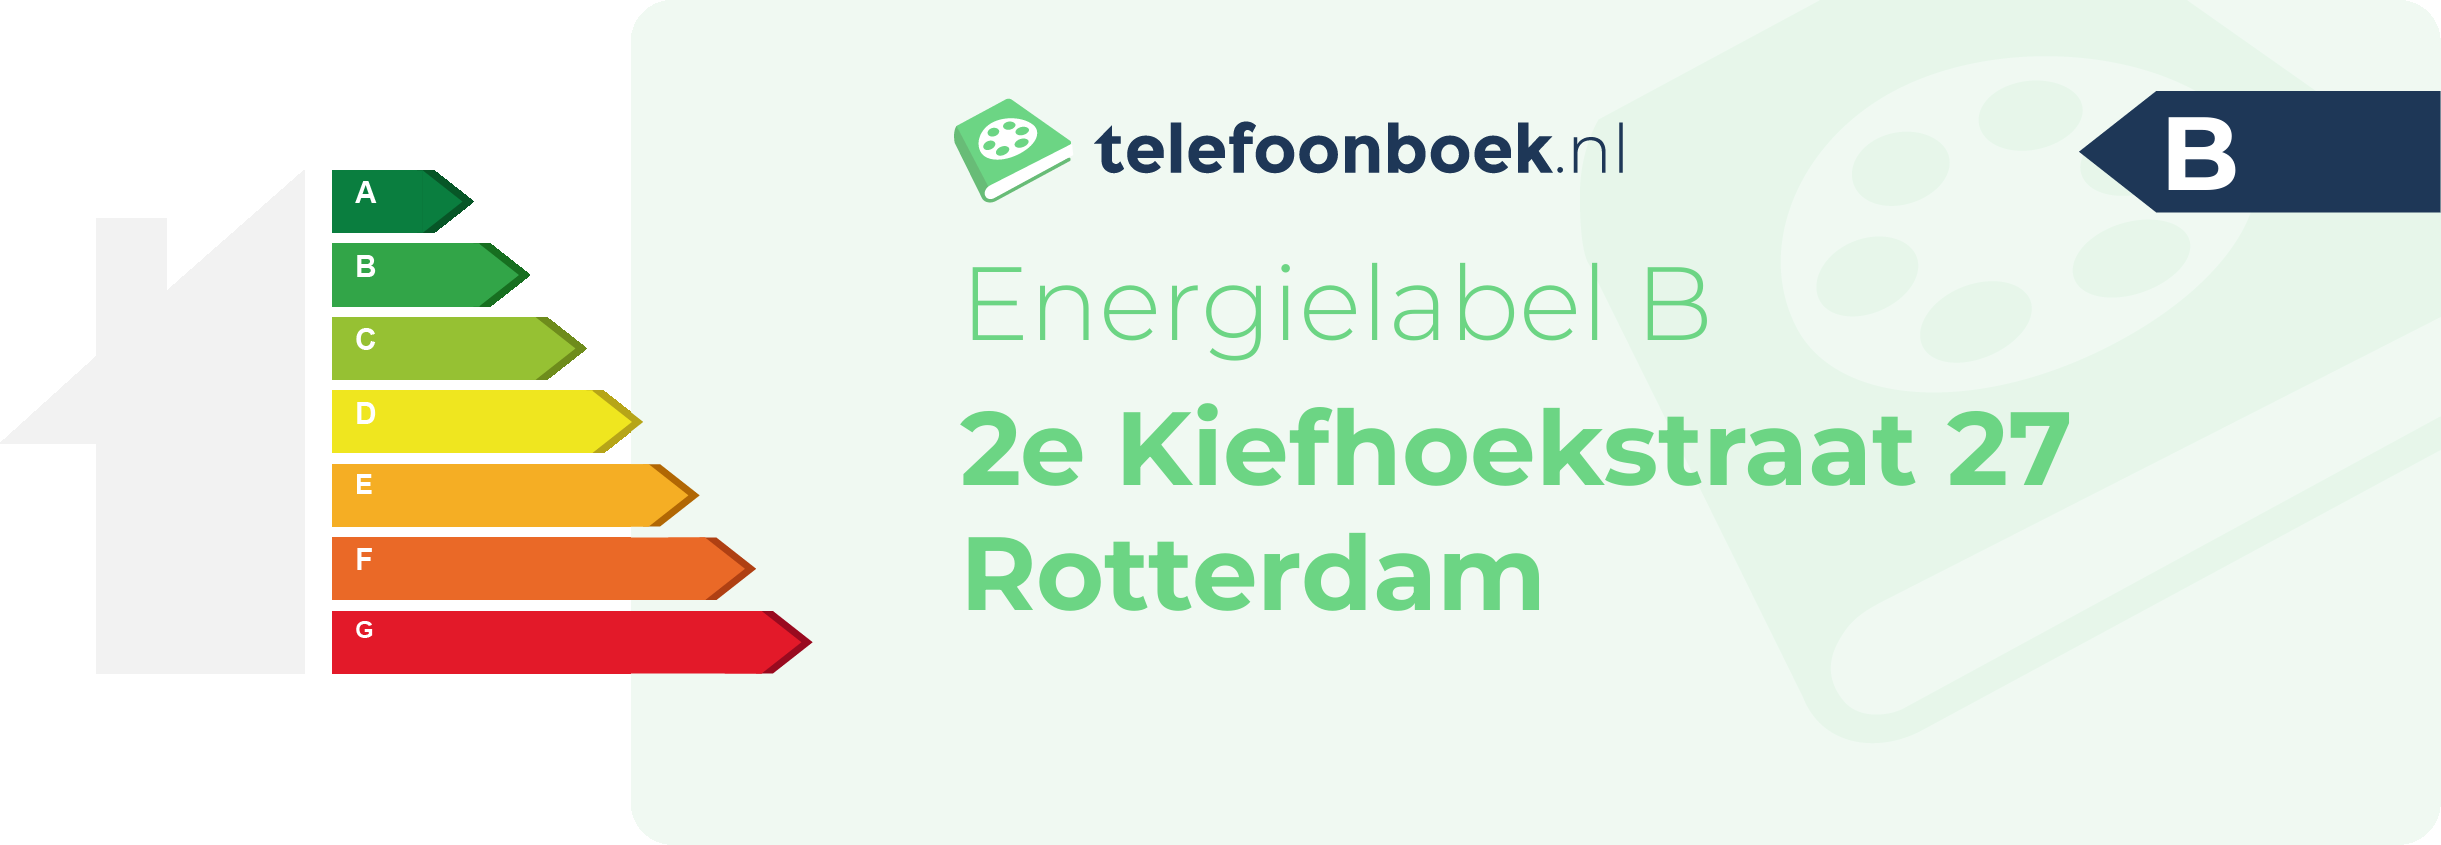 Energielabel 2e Kiefhoekstraat 27 Rotterdam